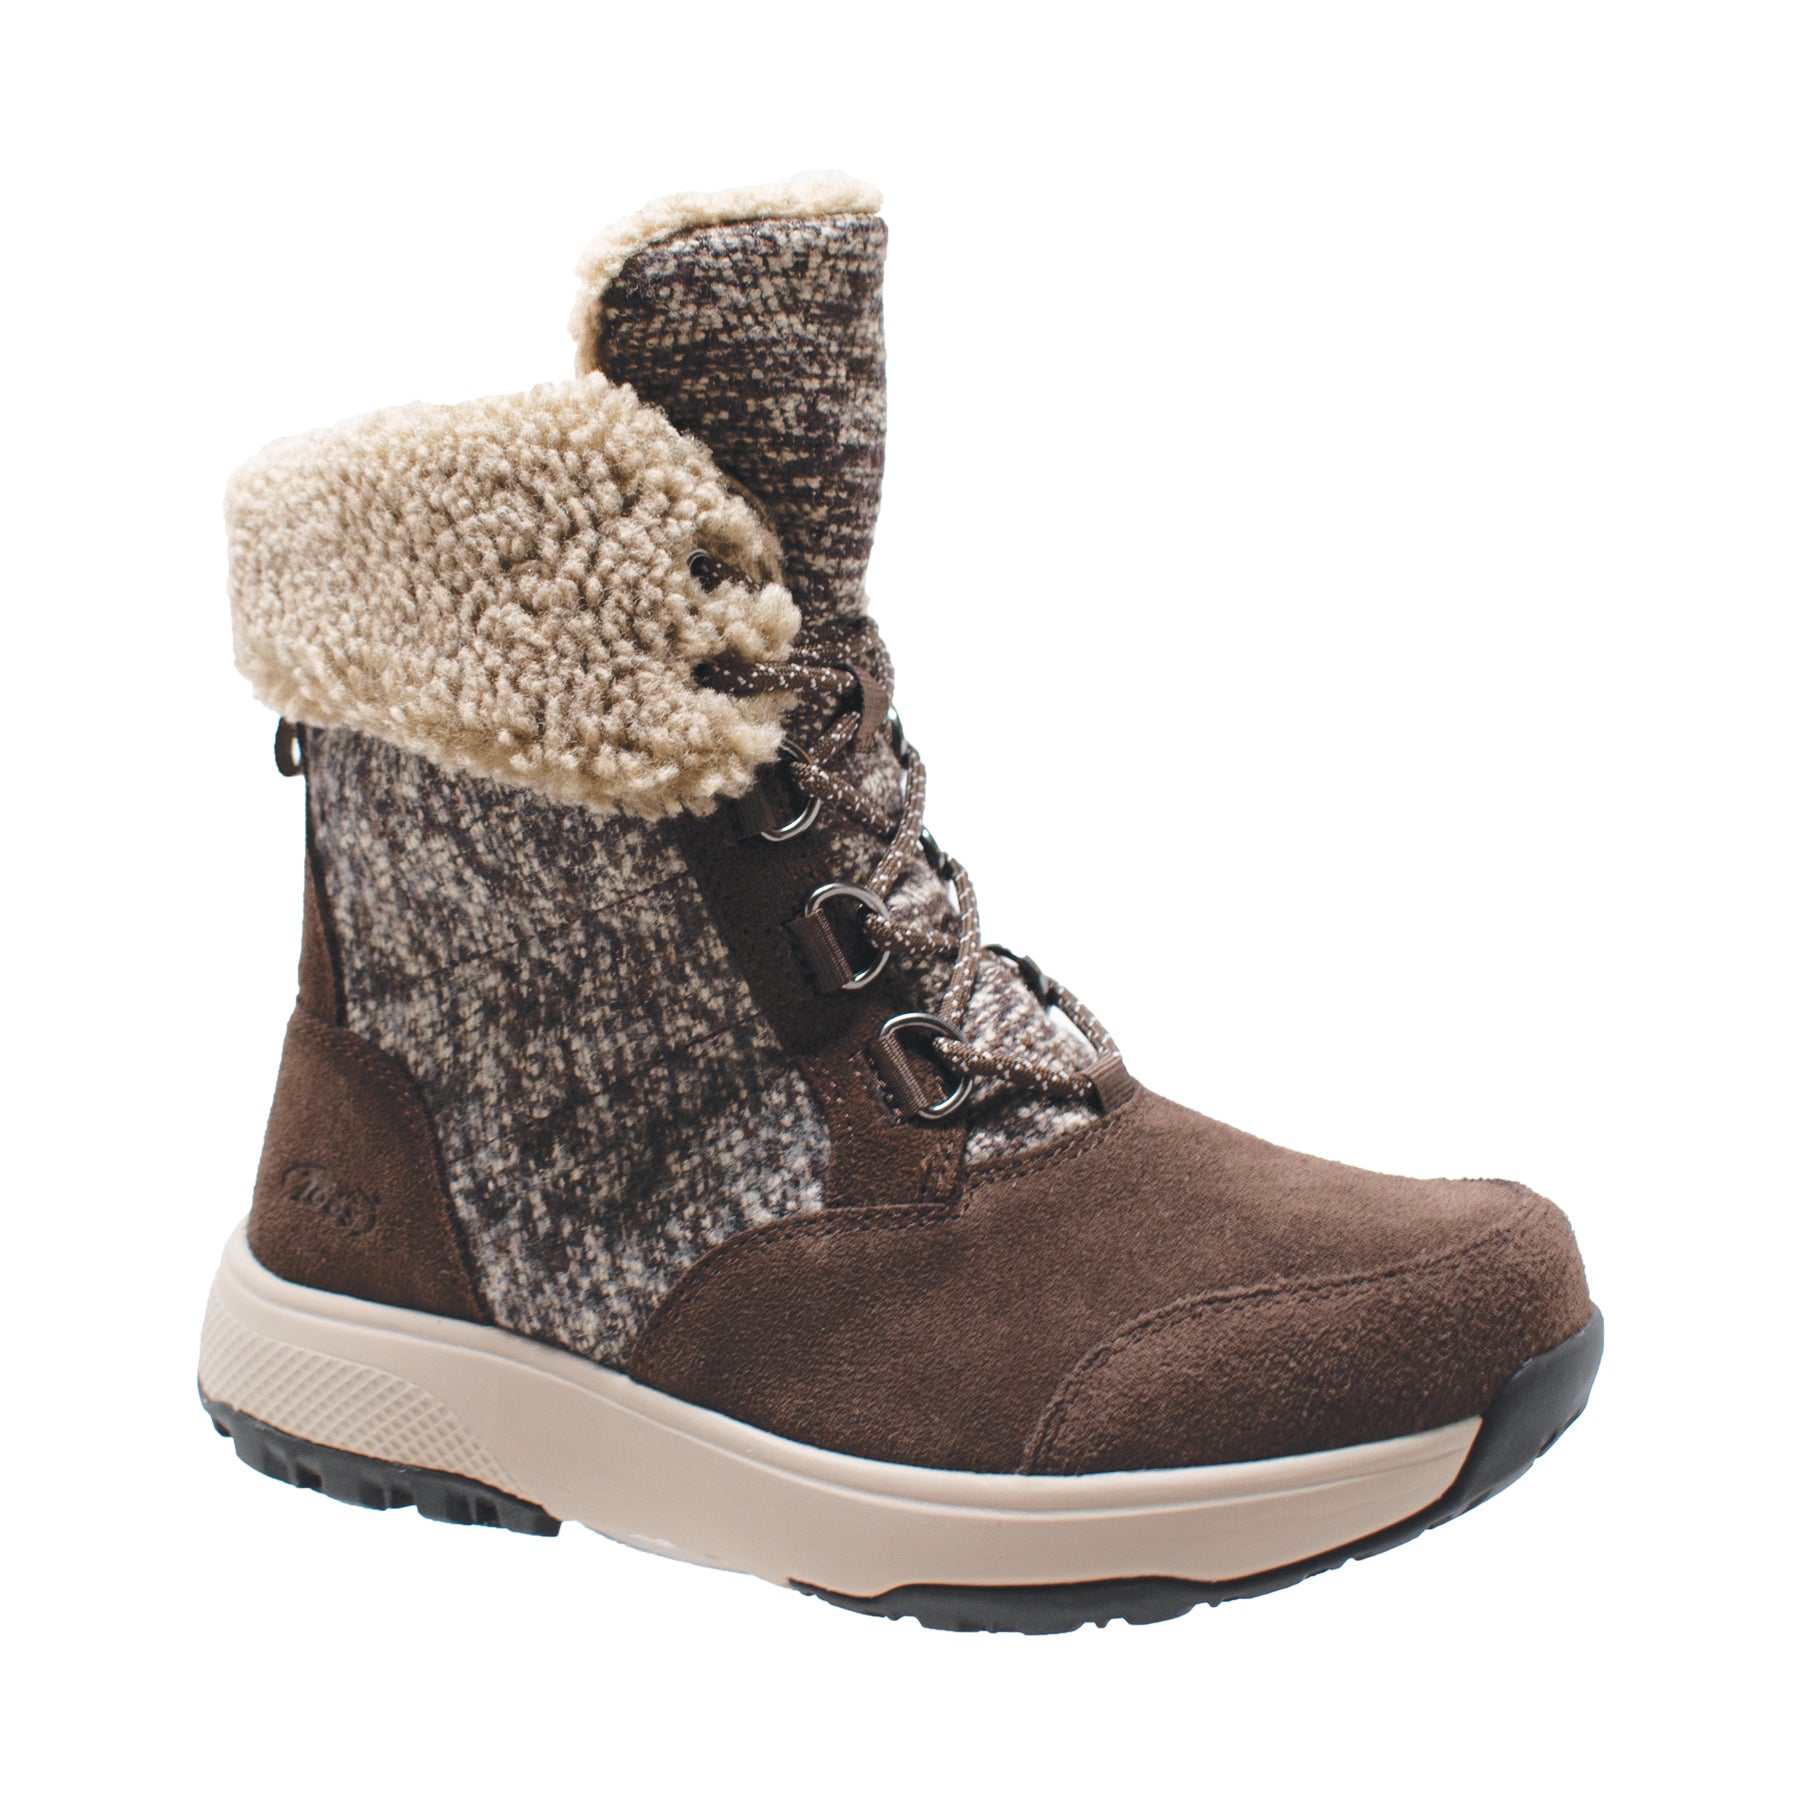 winter boots online shopping